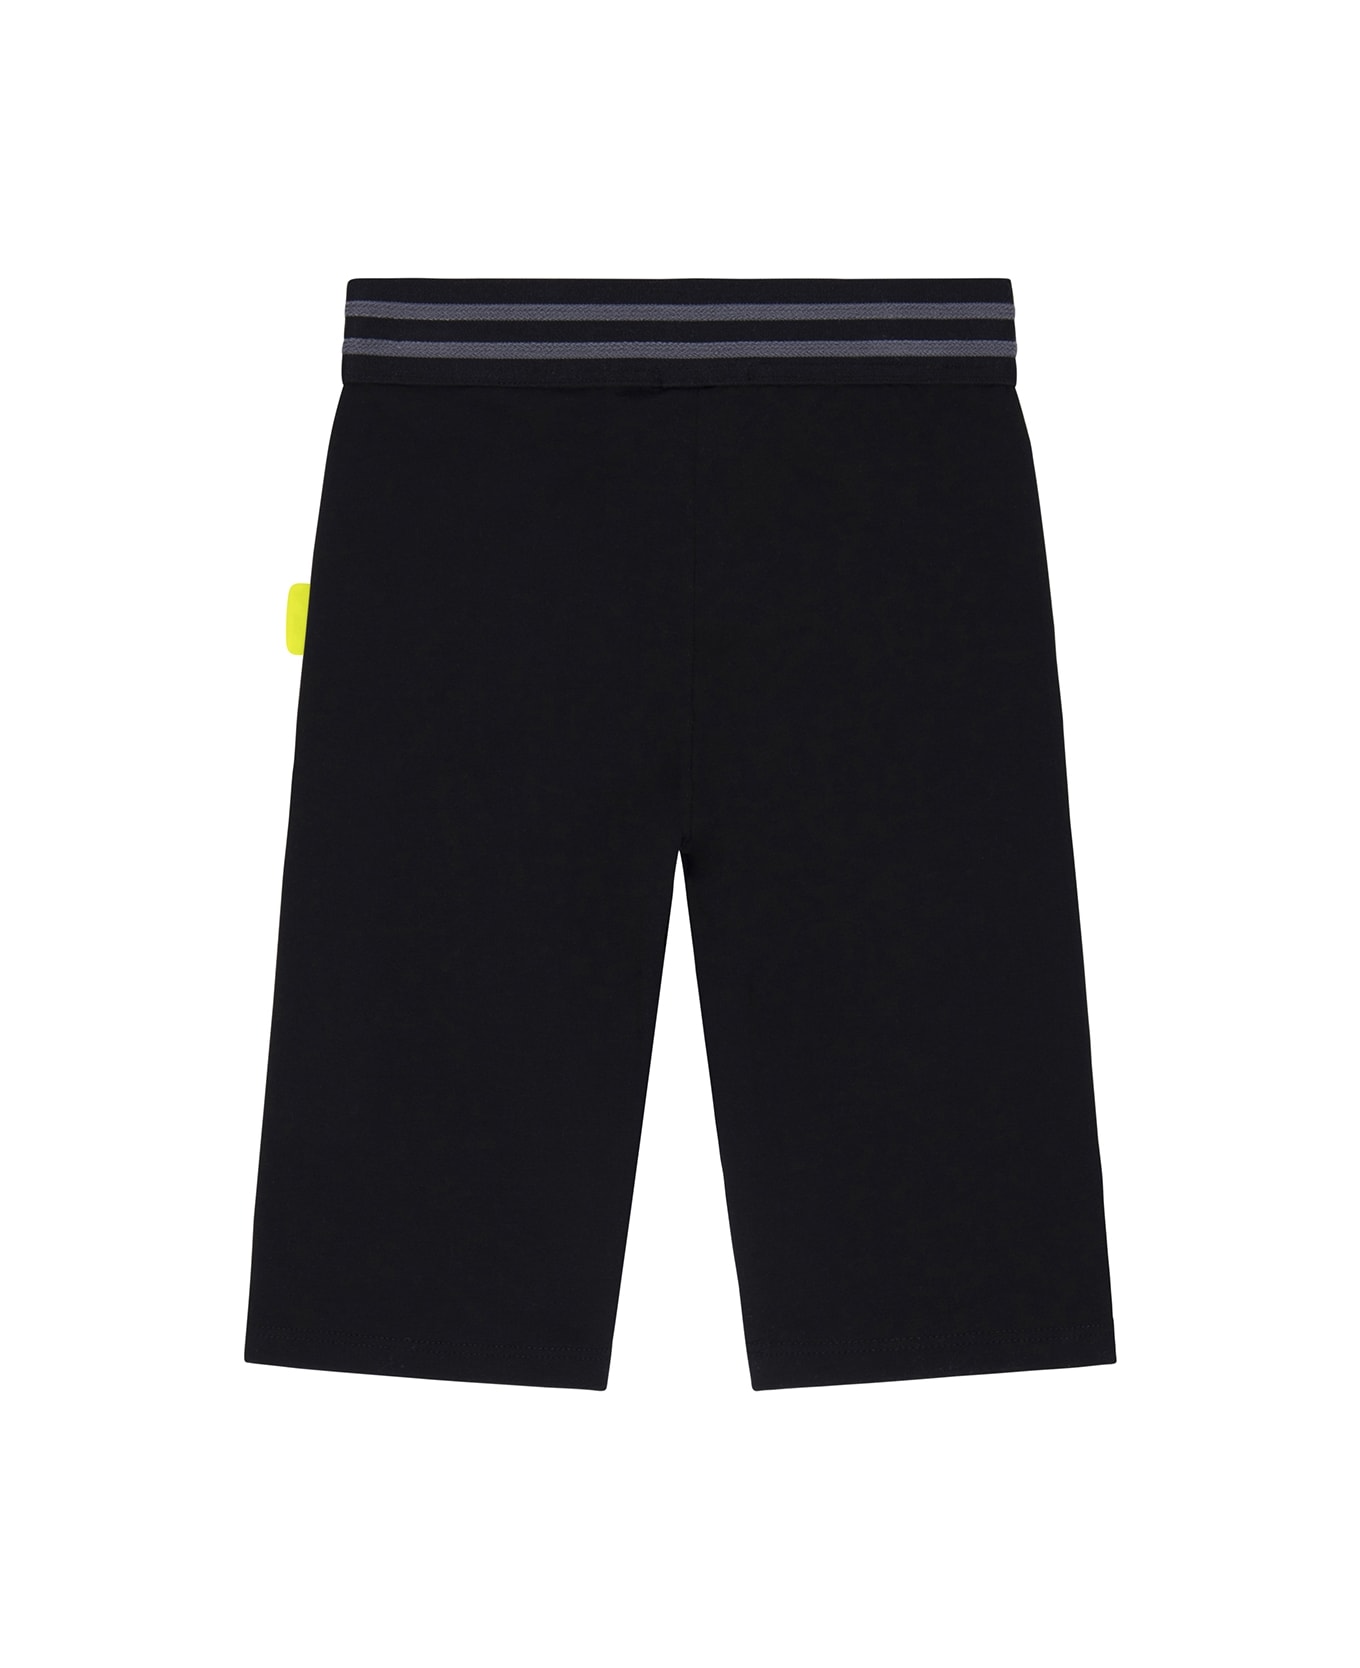 Barrow Shorts With Print - Black